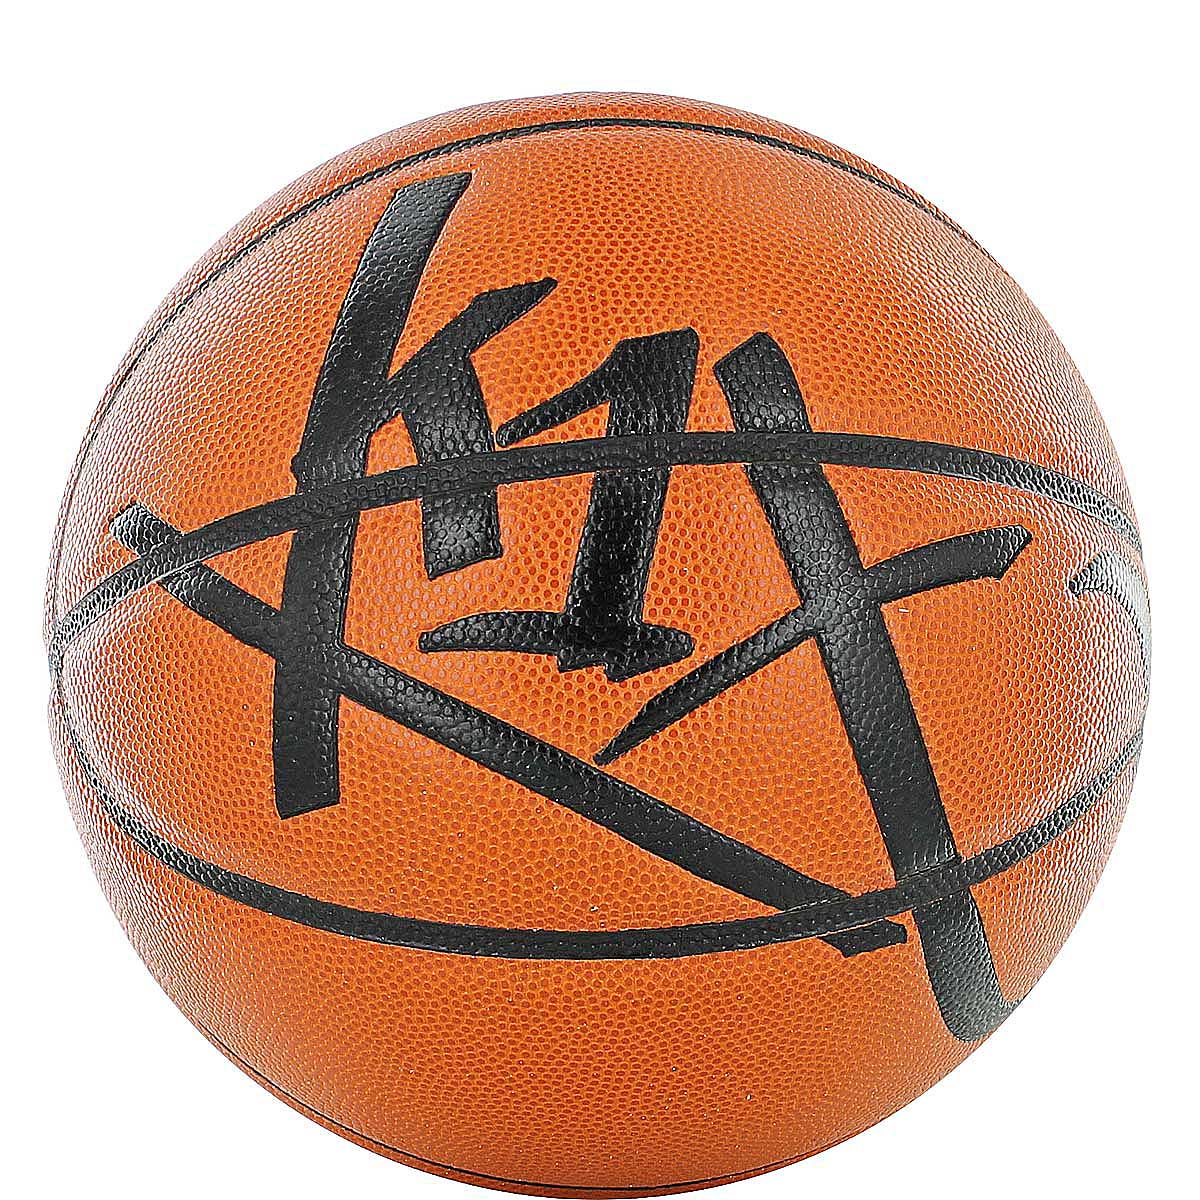 K1X Wmns 6 Ultimate Pro Basketball, Orange